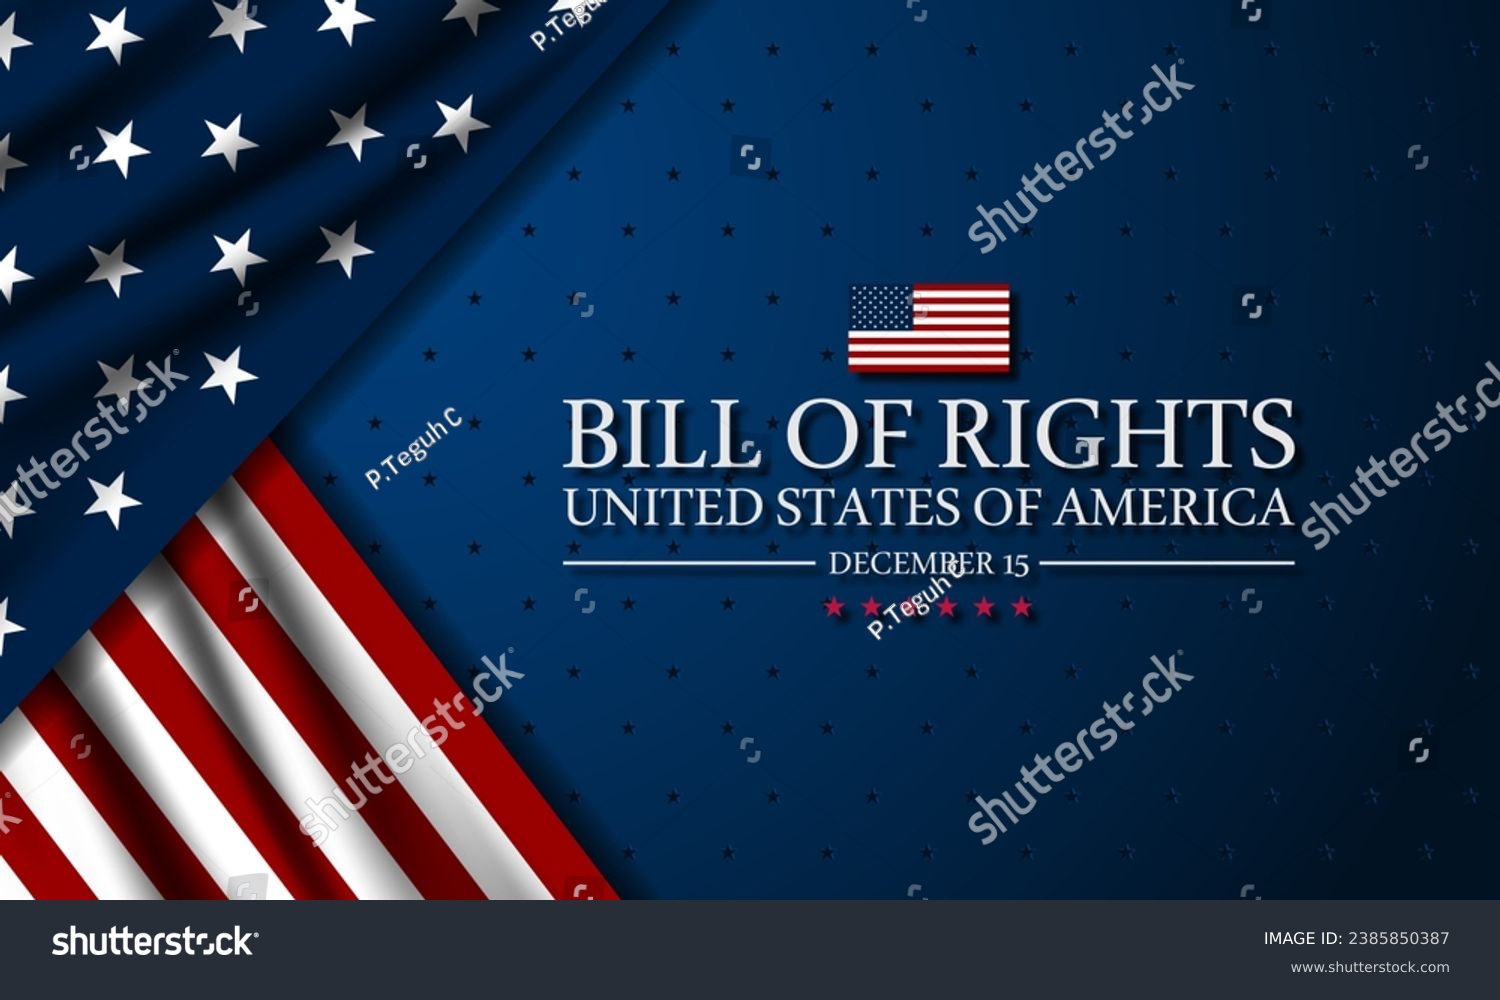 SVG of Happy Bill Of Rights Day December 15 Background Vector illustration svg